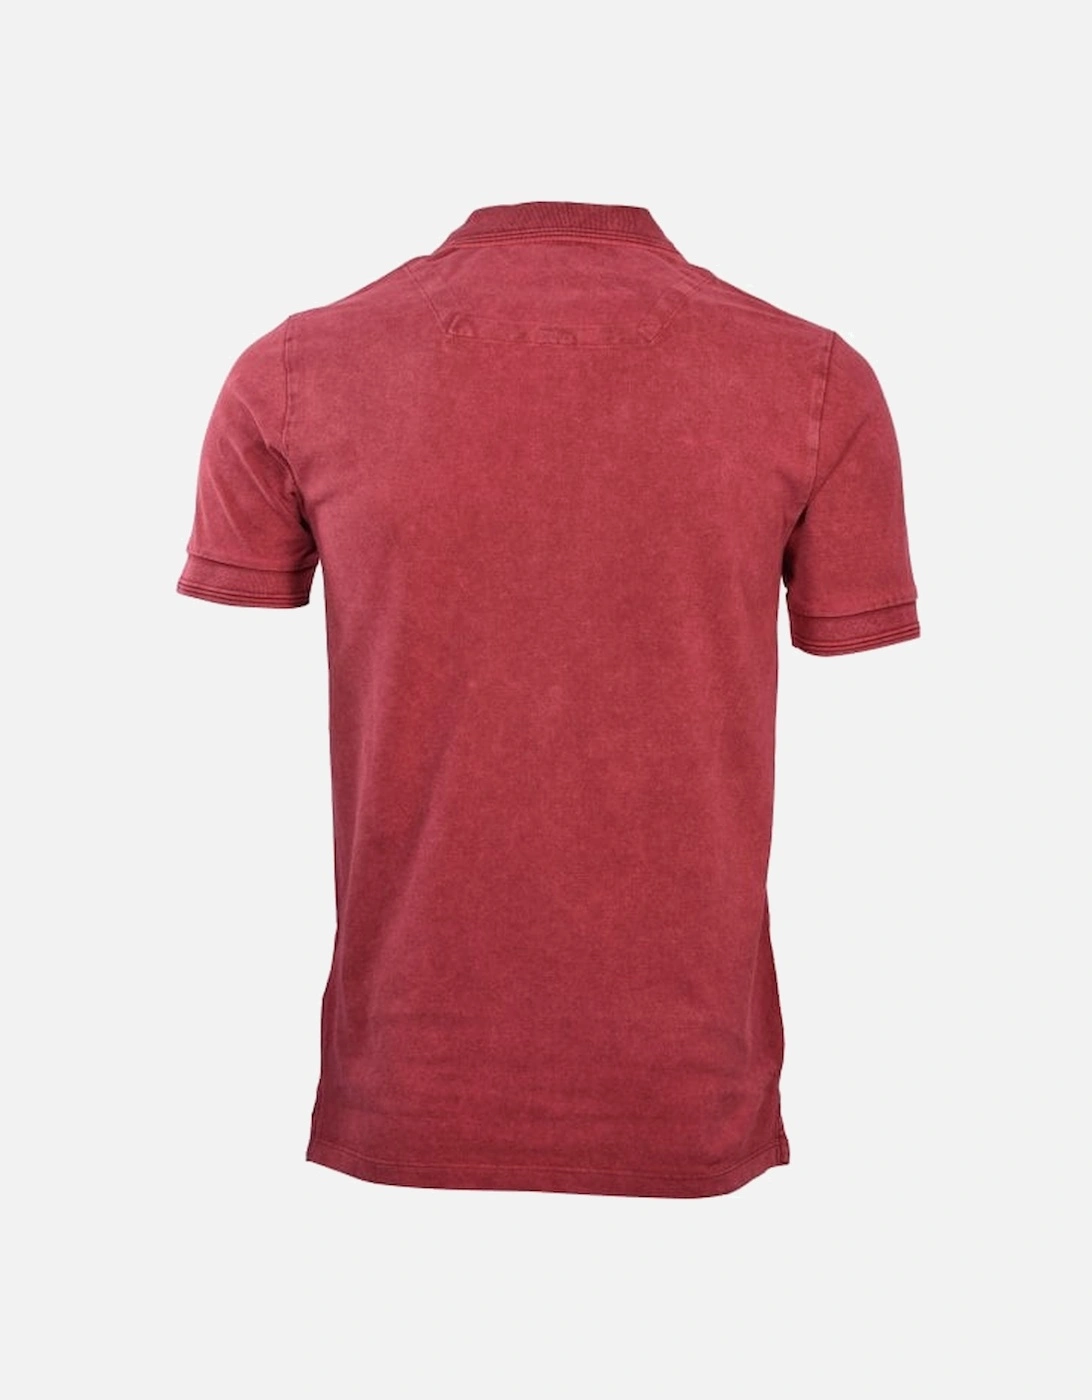 Pique Polo Shirt, Burnt Red